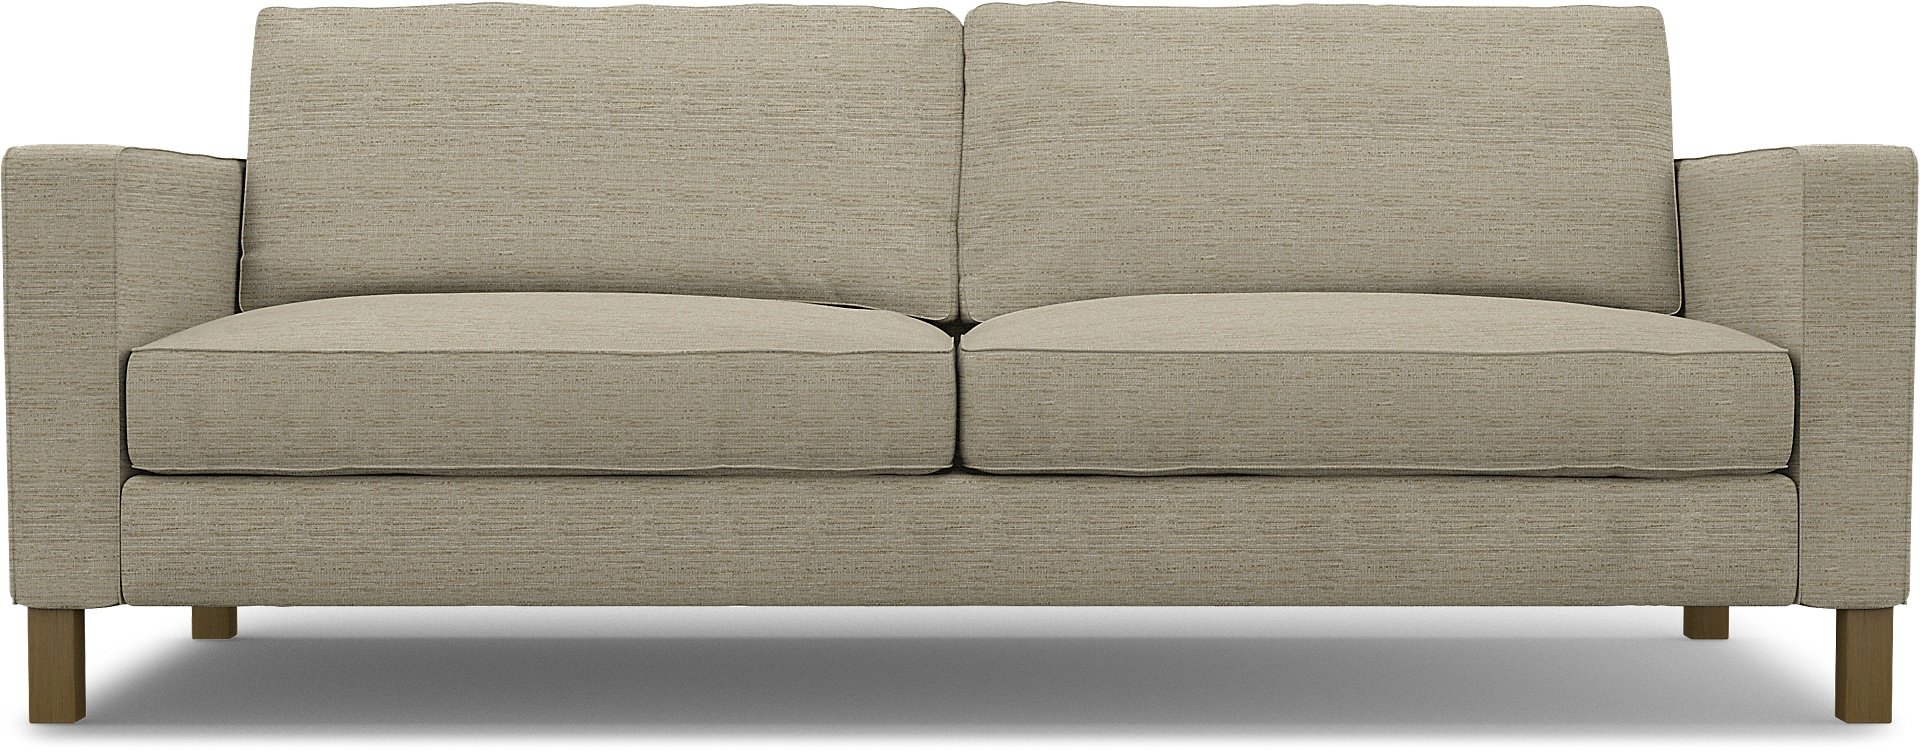 IKEA - Karlstad 3 Seater Sofa Cover, Light Sand, Boucle & Texture - Bemz